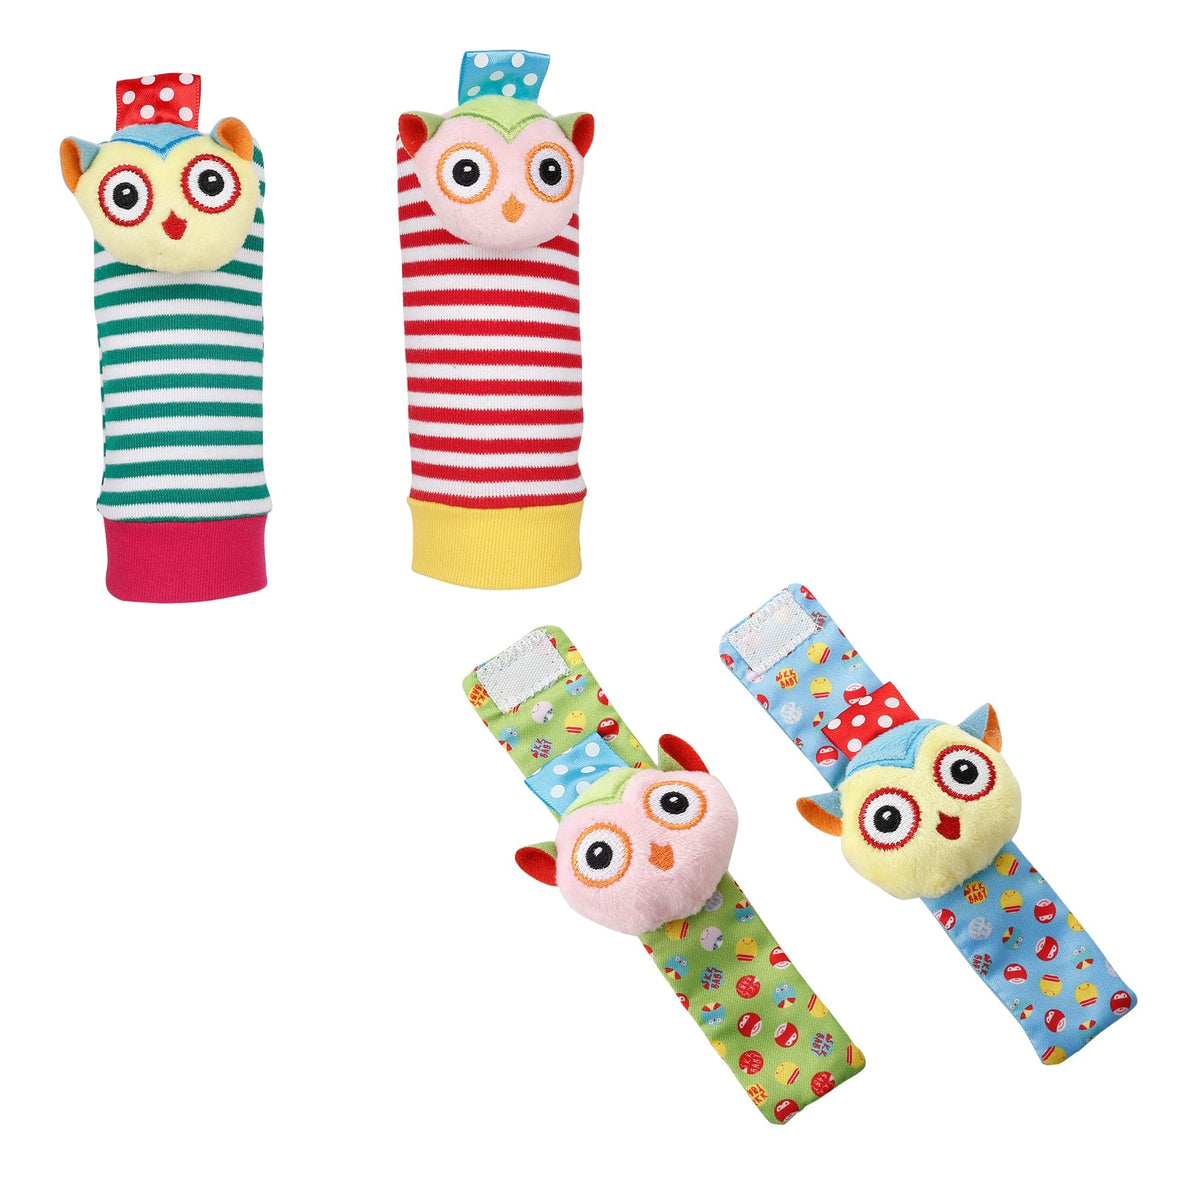 Kotty Baby Wrist Rattles Foot Finder Toys Set, Toddler Rattle Sock